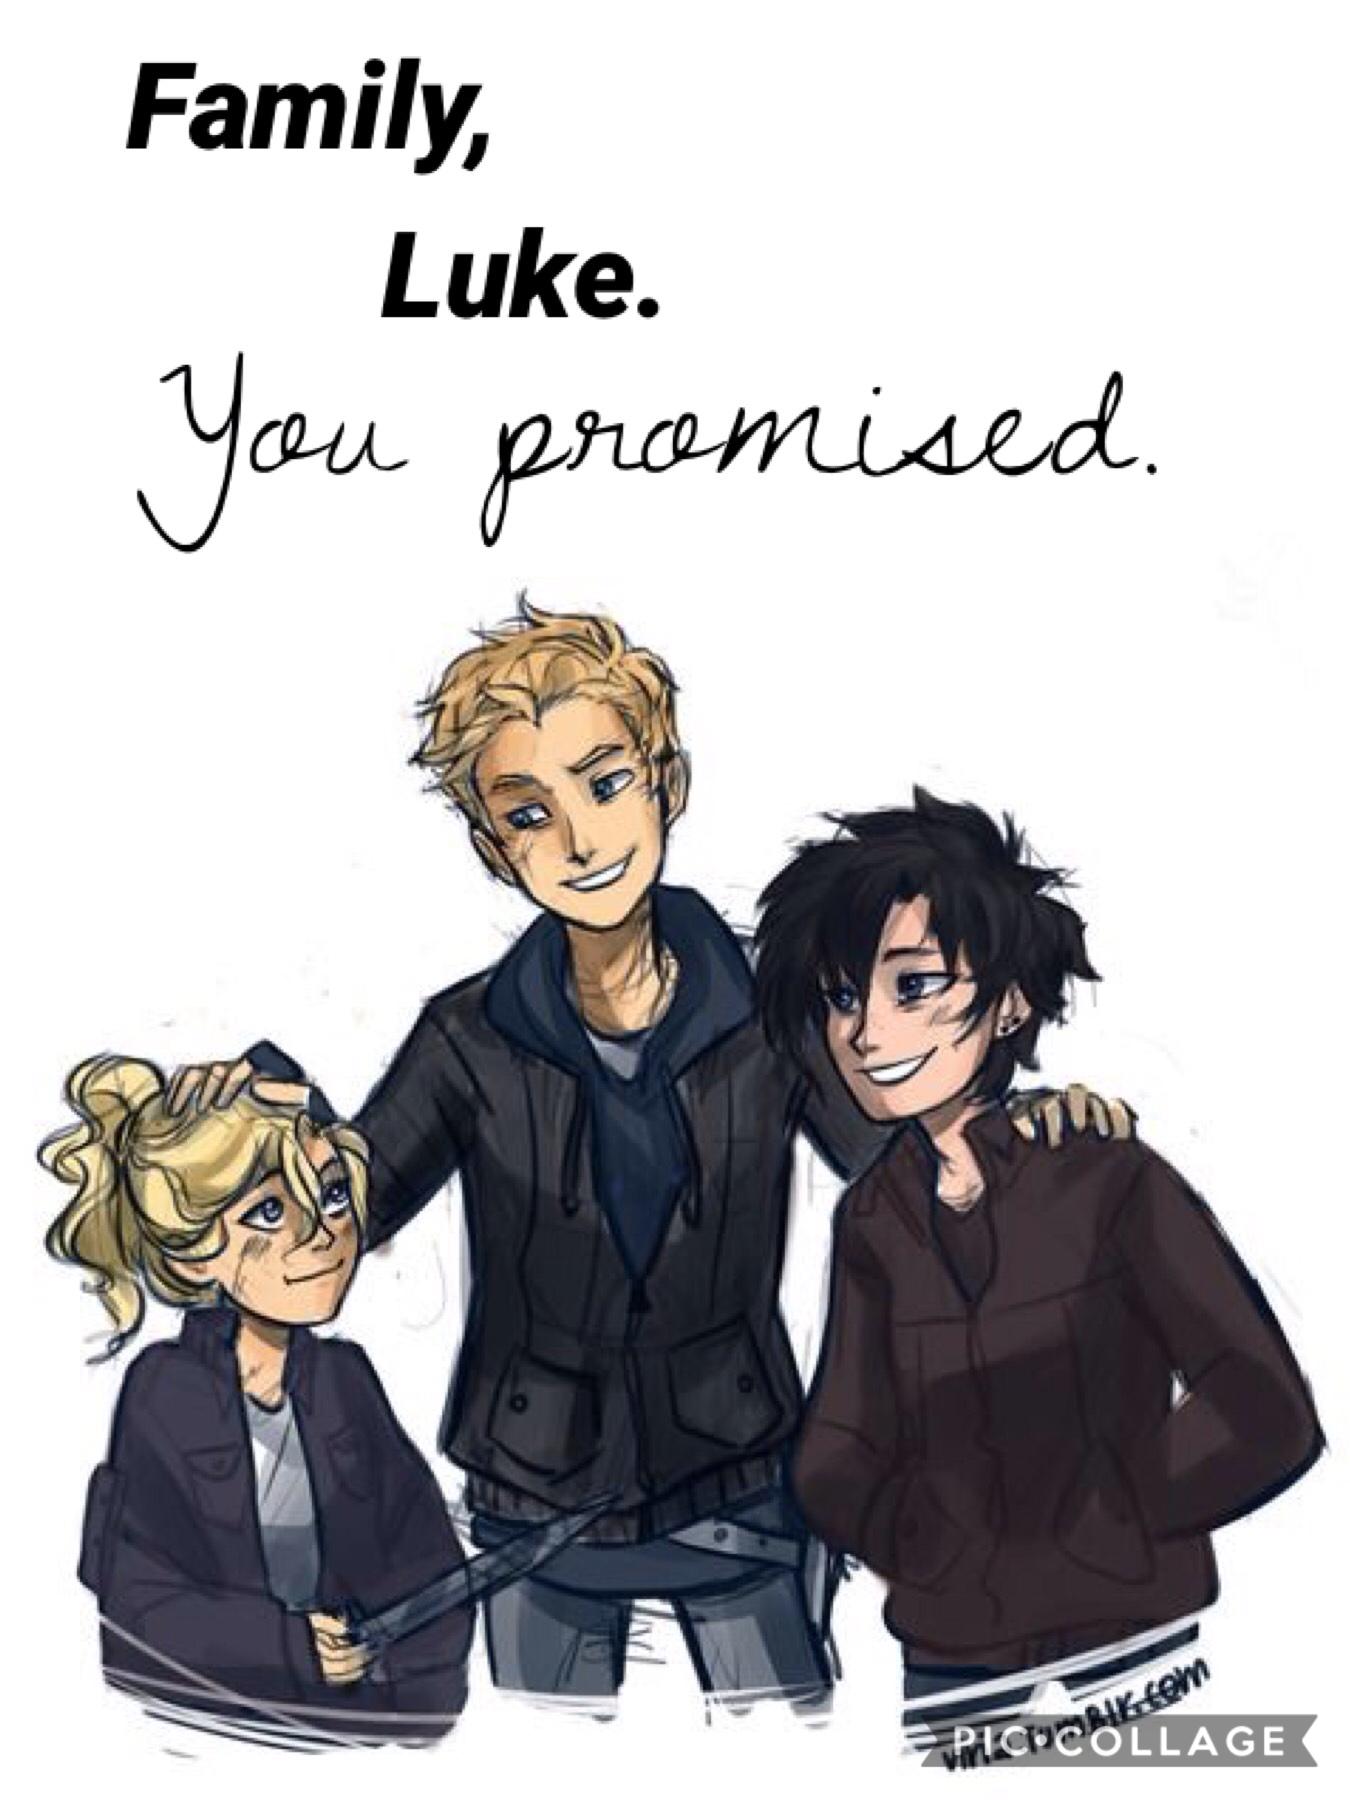 "Family, Luke. You promised." -Annabeth Chase